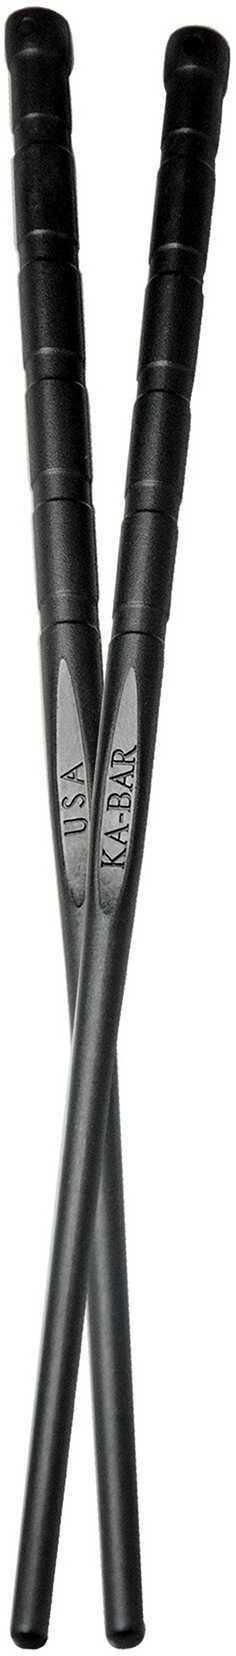 Ka-Bar Chopsticks Md: 9919